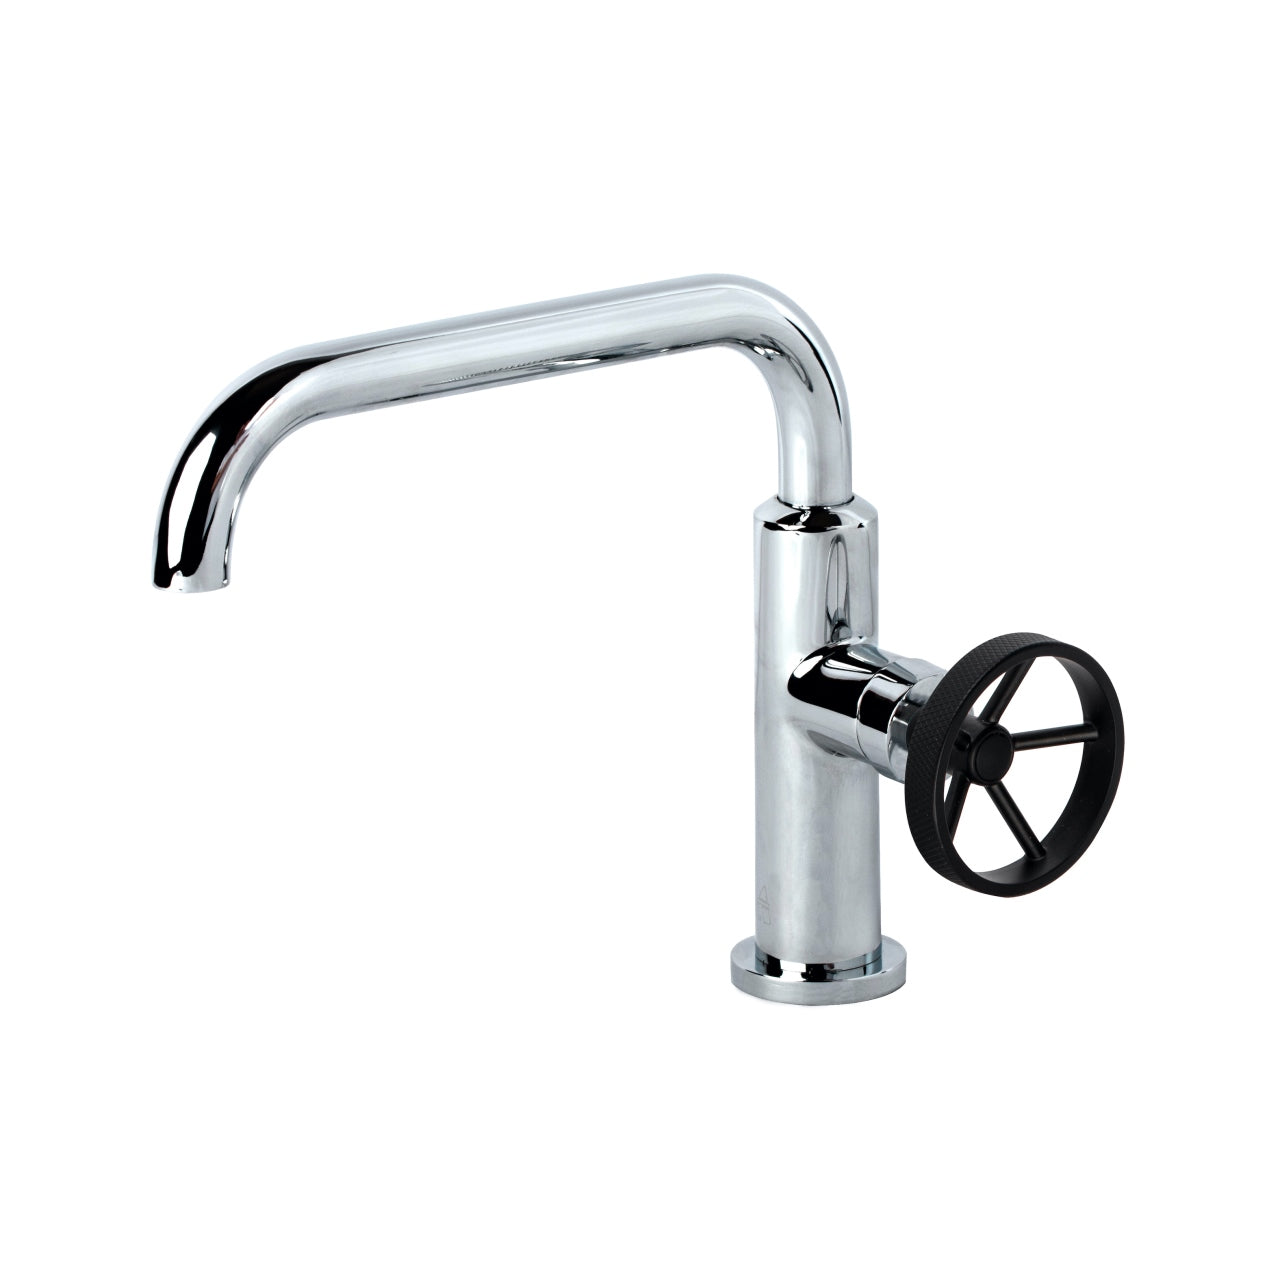 Aqua Loft Single Lever Bathroom Vanity Faucet with Side Handle – Chrome